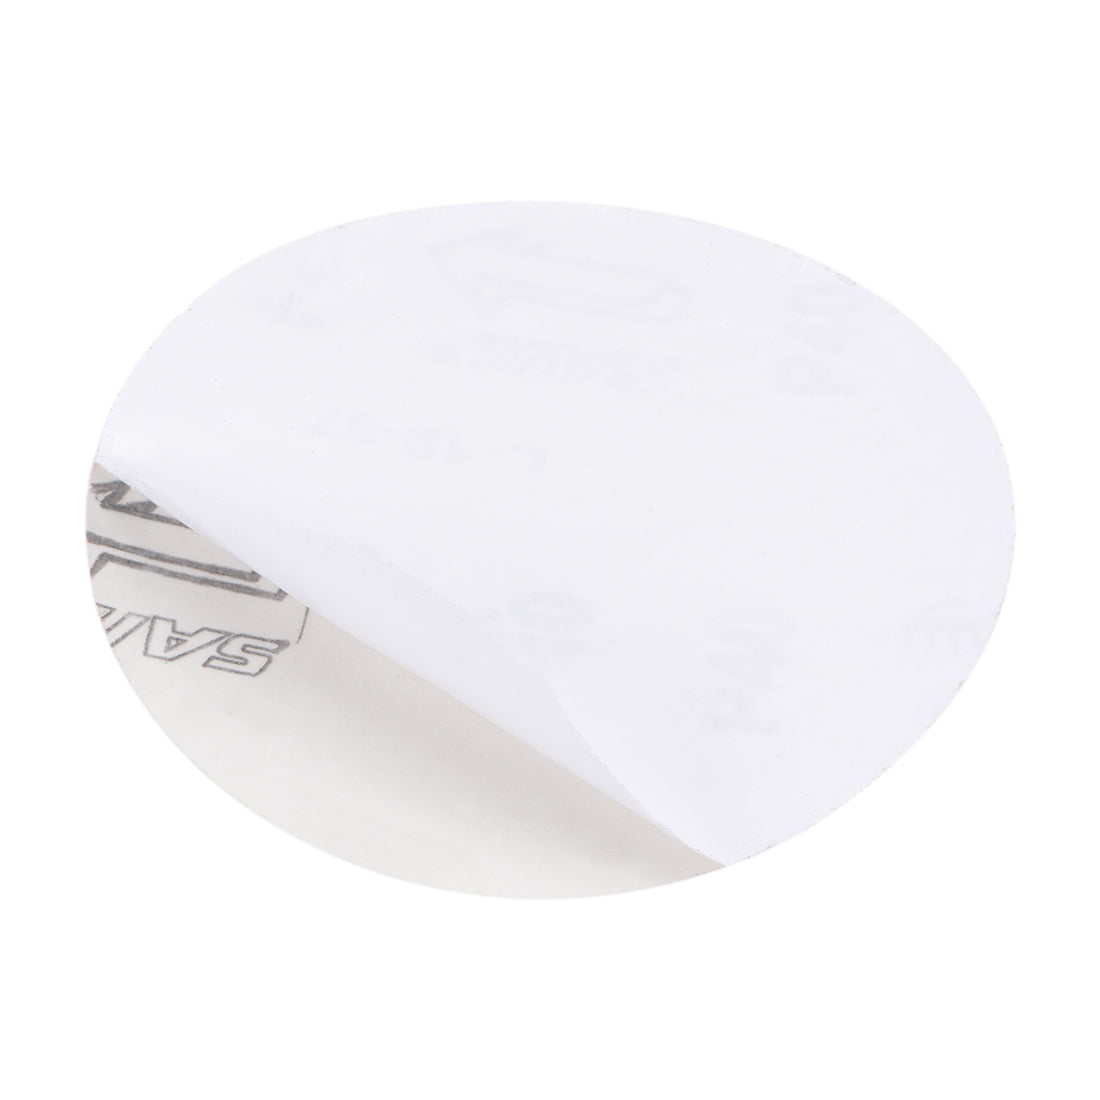 uxcell Uxcell 5-Inch PSA Sanding Disc Aluminum Oxide Adhesive Back Sandpaper 40 Grit 15 Pcs